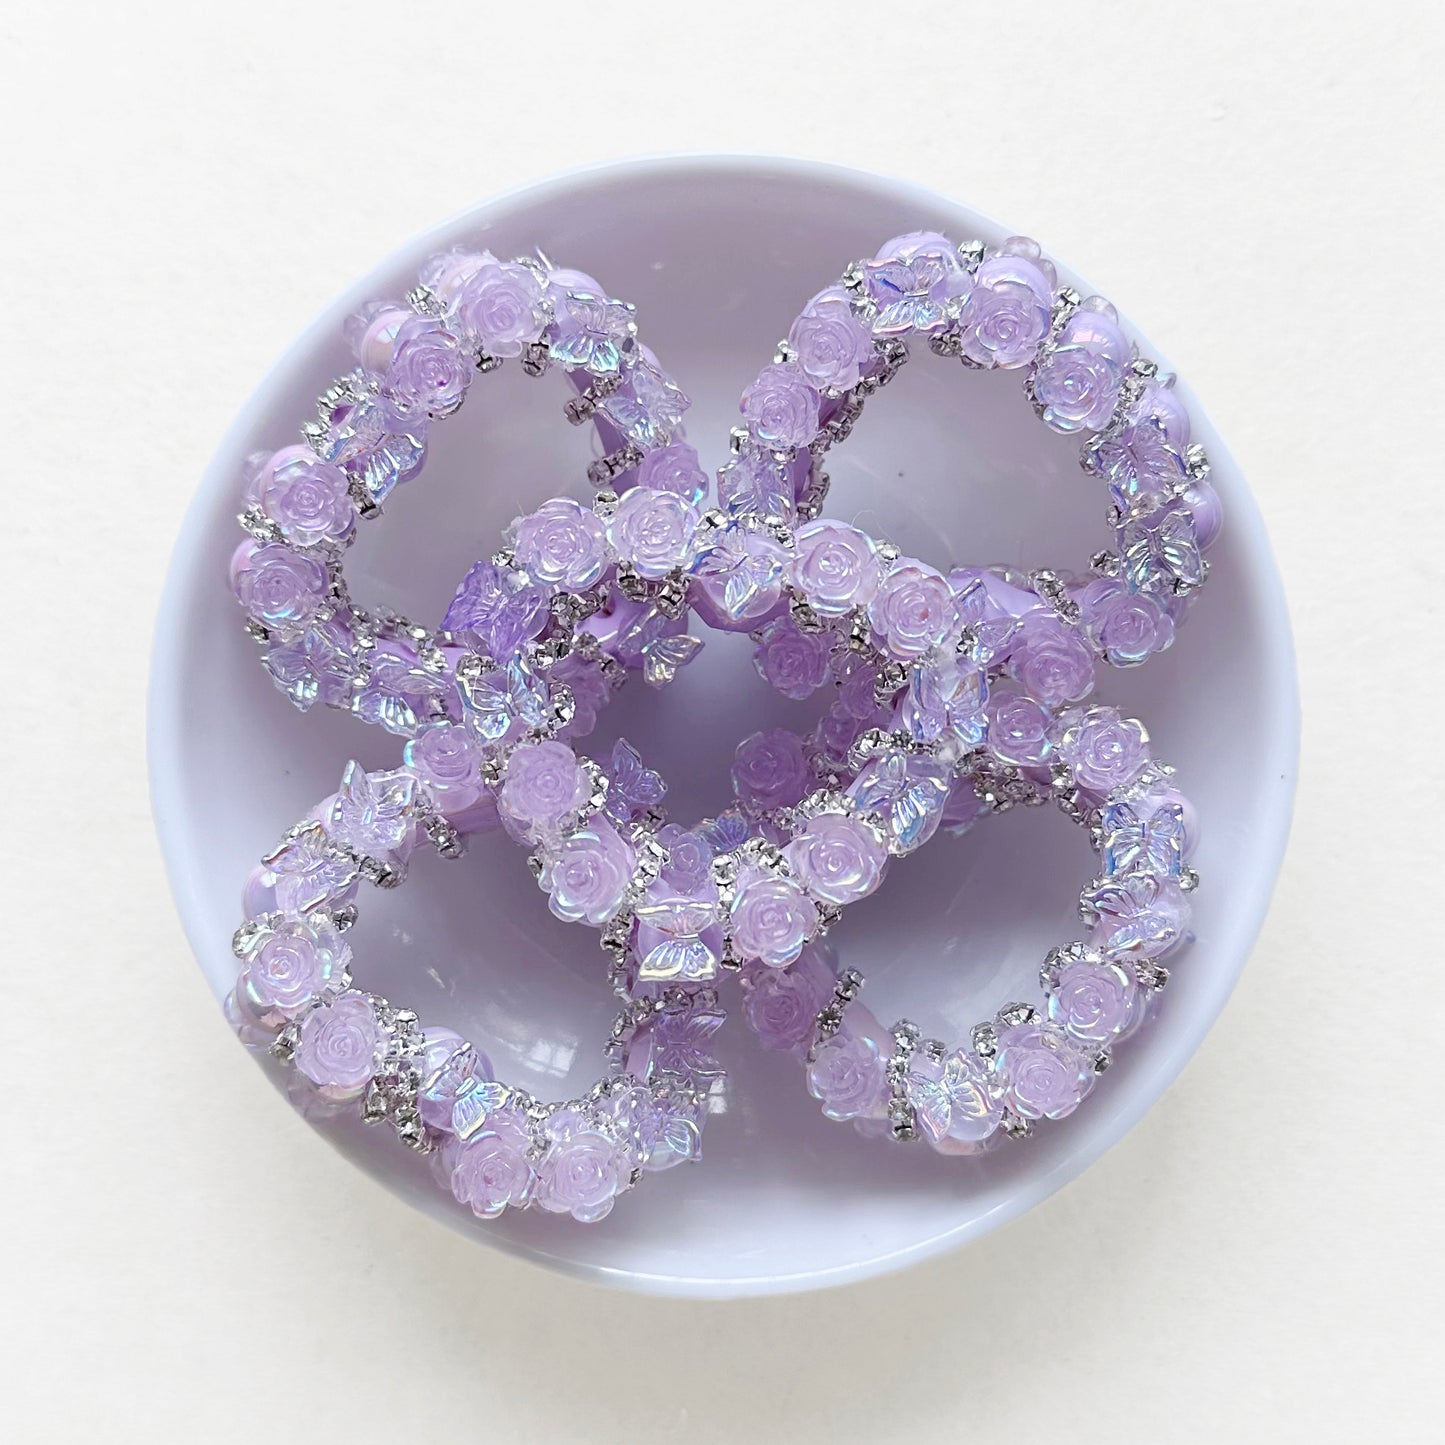 Flower Butterfly Heart Frame Beads,Sparkle Rhinestone Chain Frame Beads